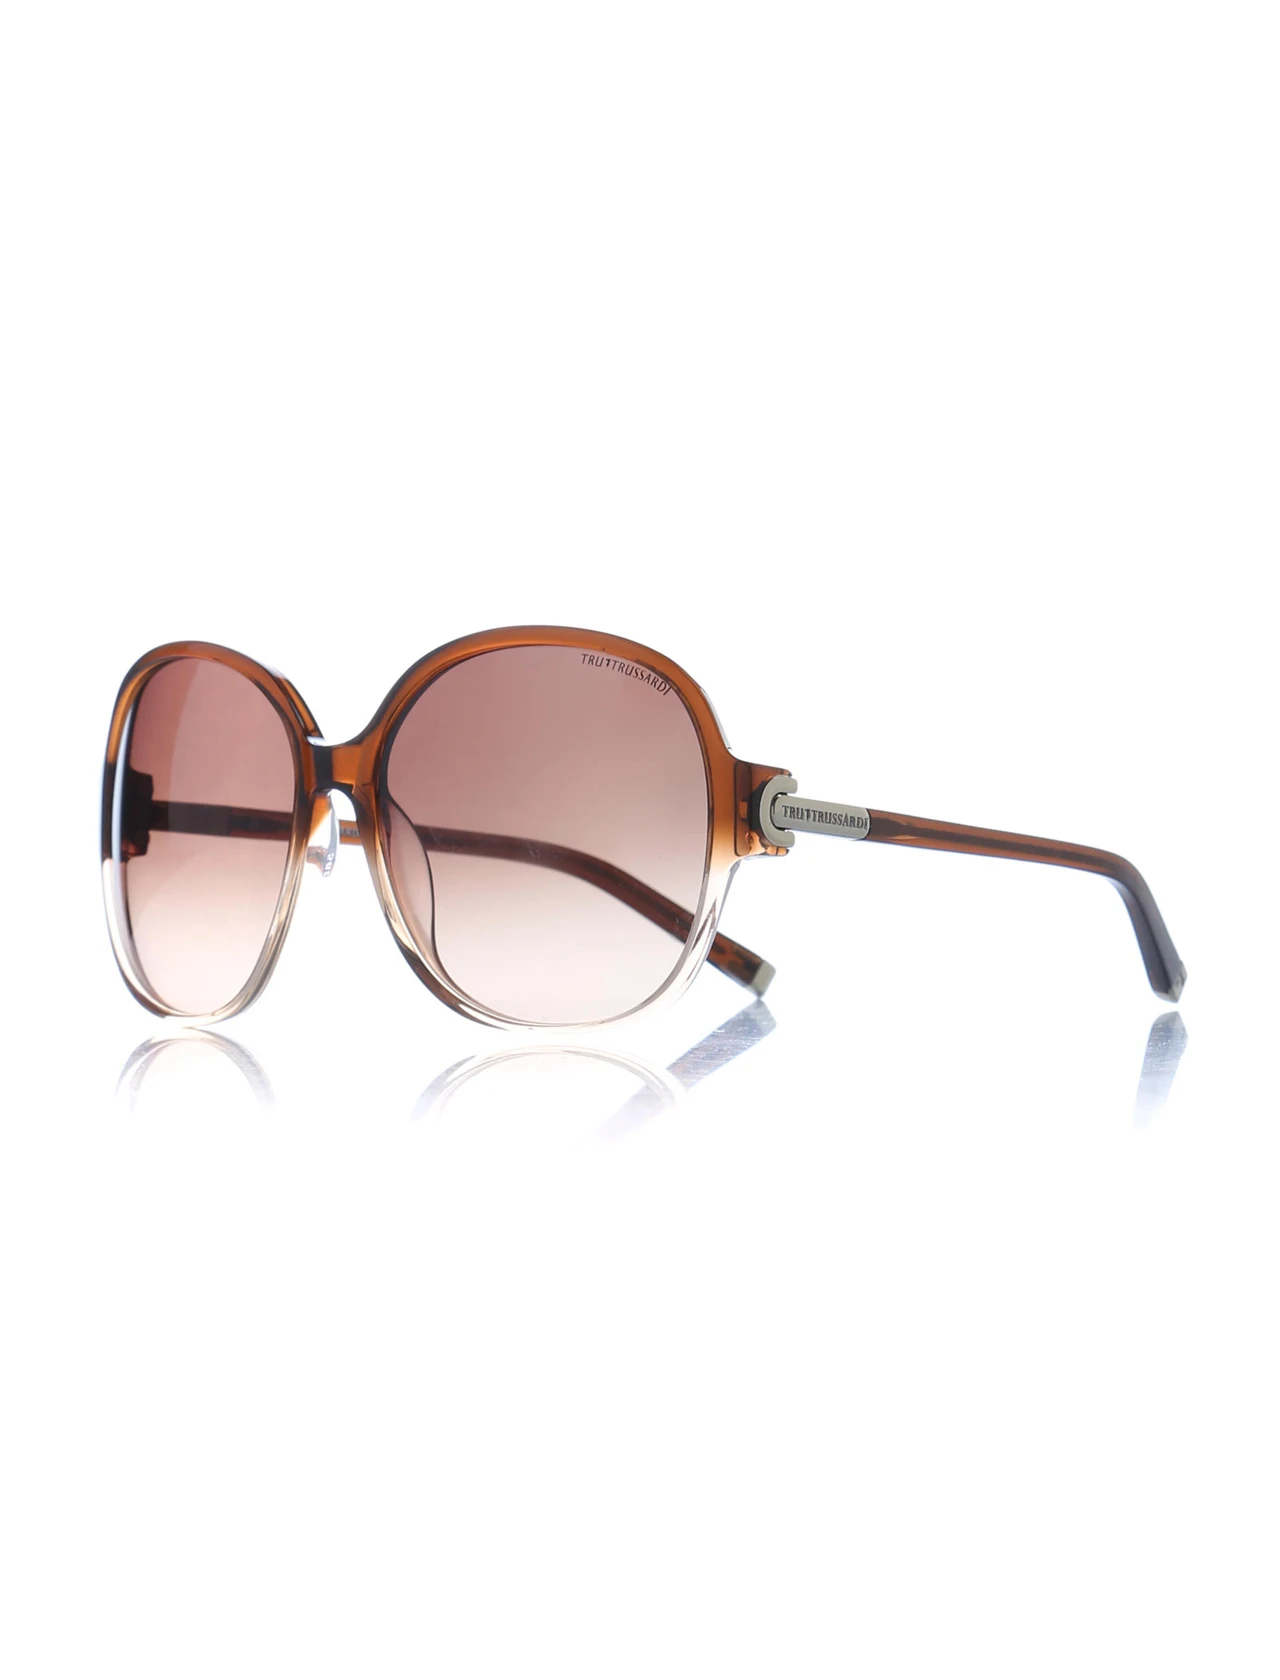 

Women's sunglasses trs 128 30 br bone Brown organic oval aval 58-17-130 trussardi